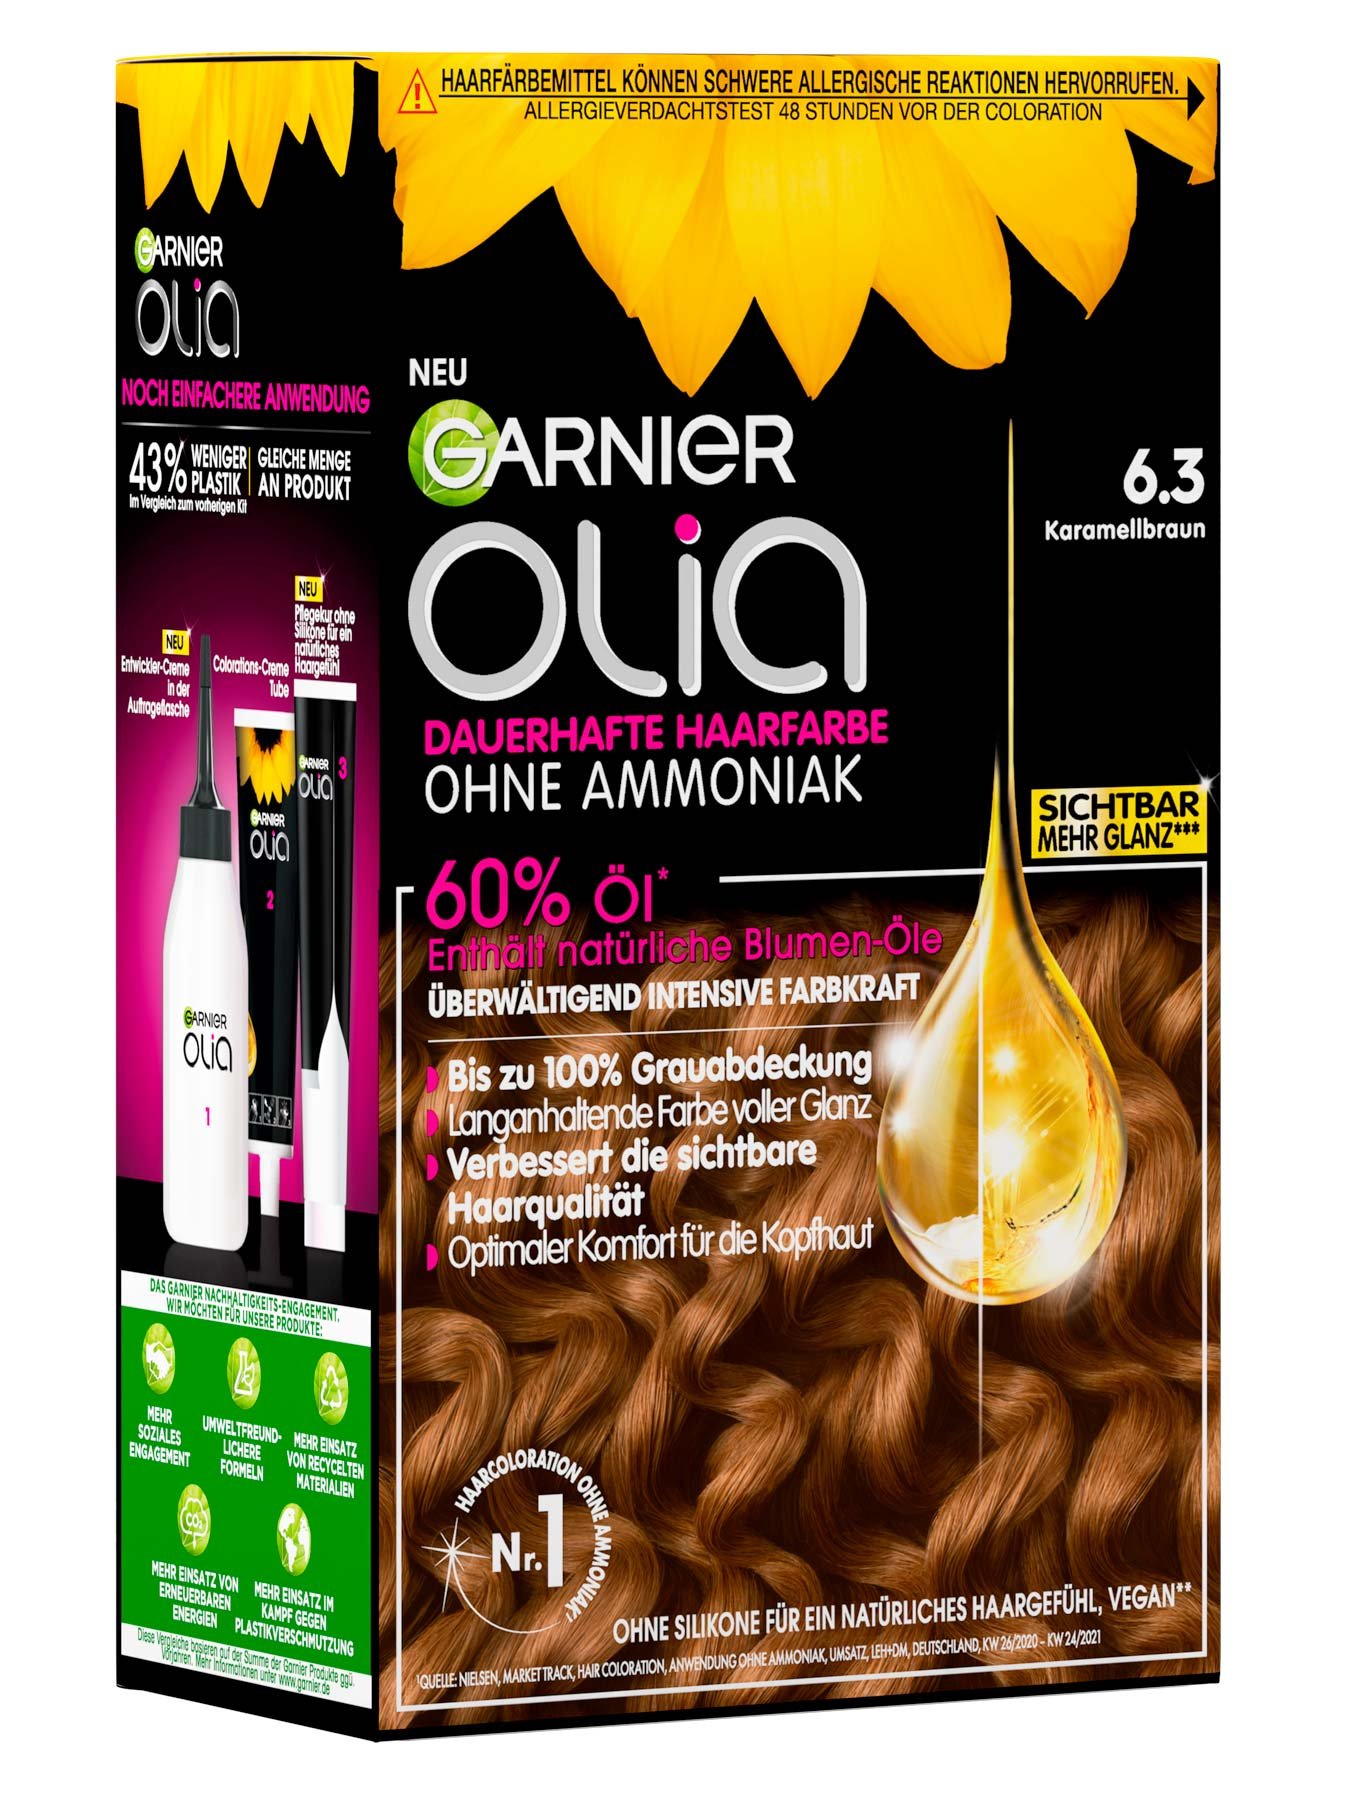 Garnier Olia Nr. 6.3 Karamellbraun - Produktansicht links